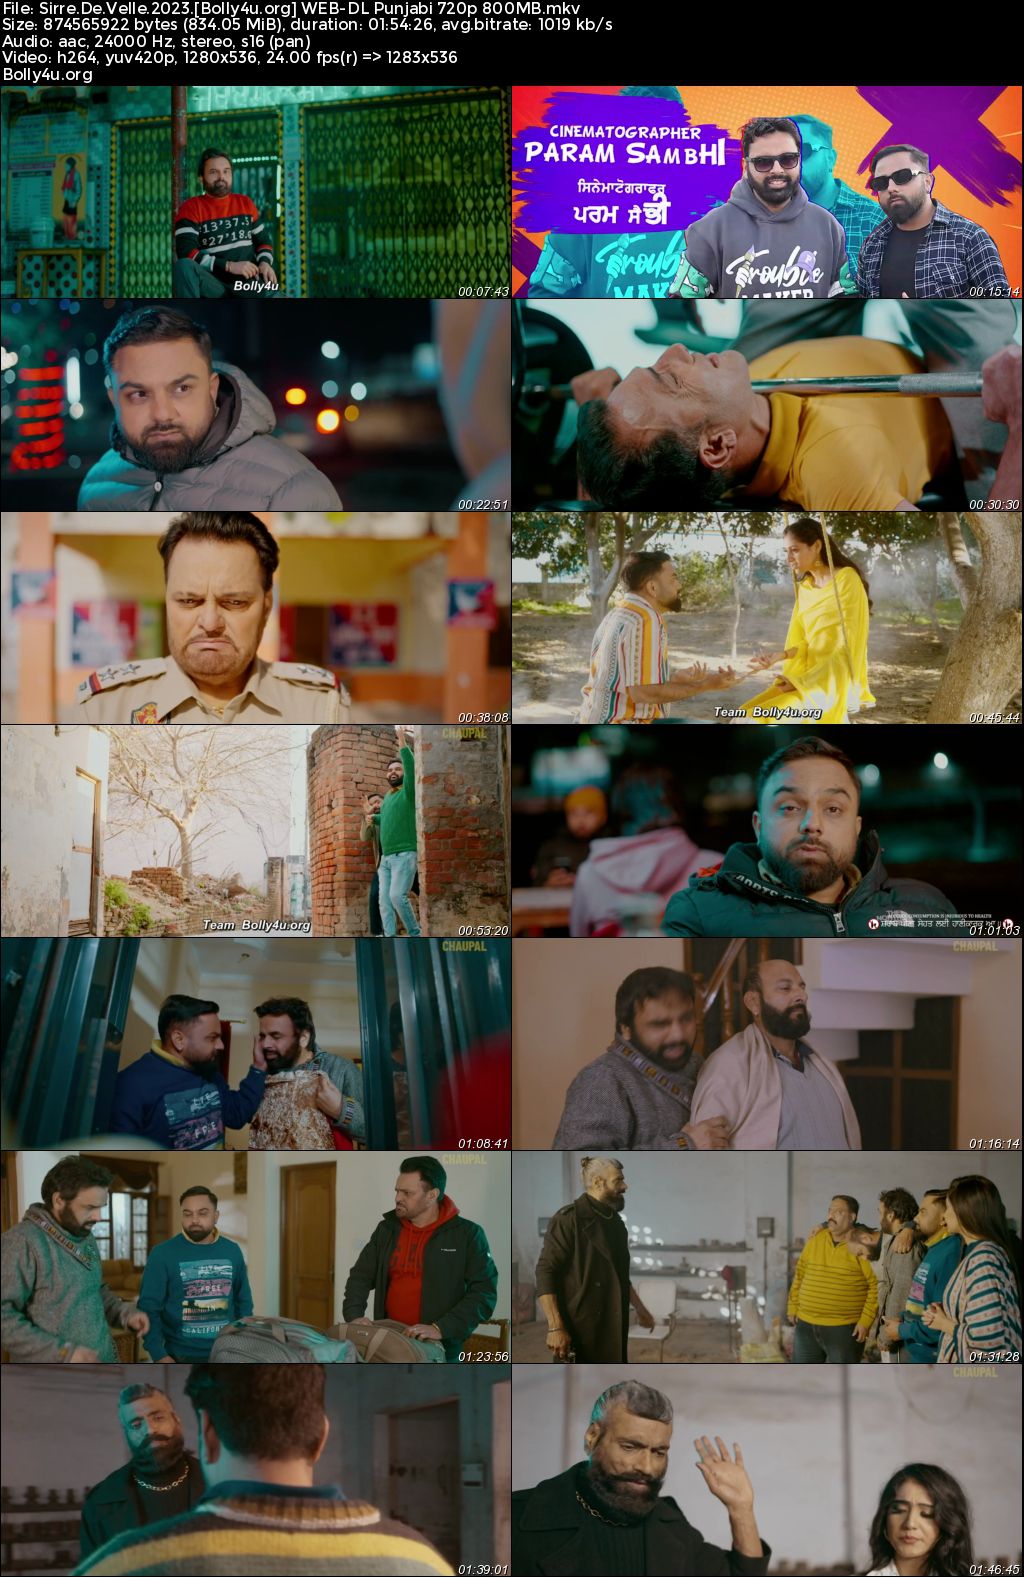 Sirre De Velle 2023 WEB-DL Punjabi Full Movie Download 1080p 720p 480p